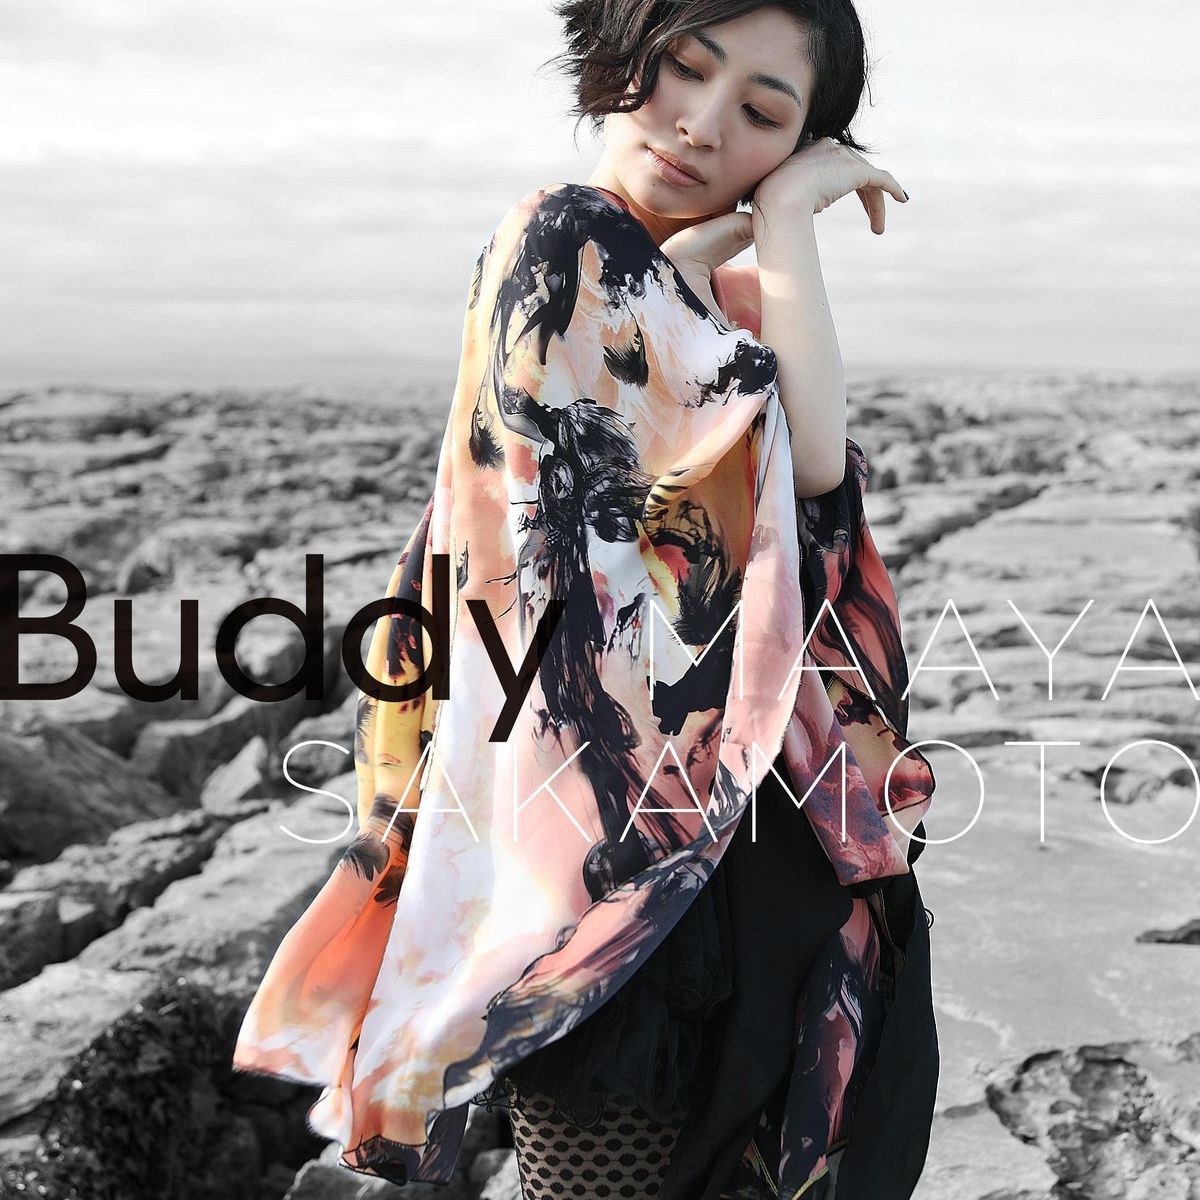 Maaya Sakamoto — Buddy cover artwork